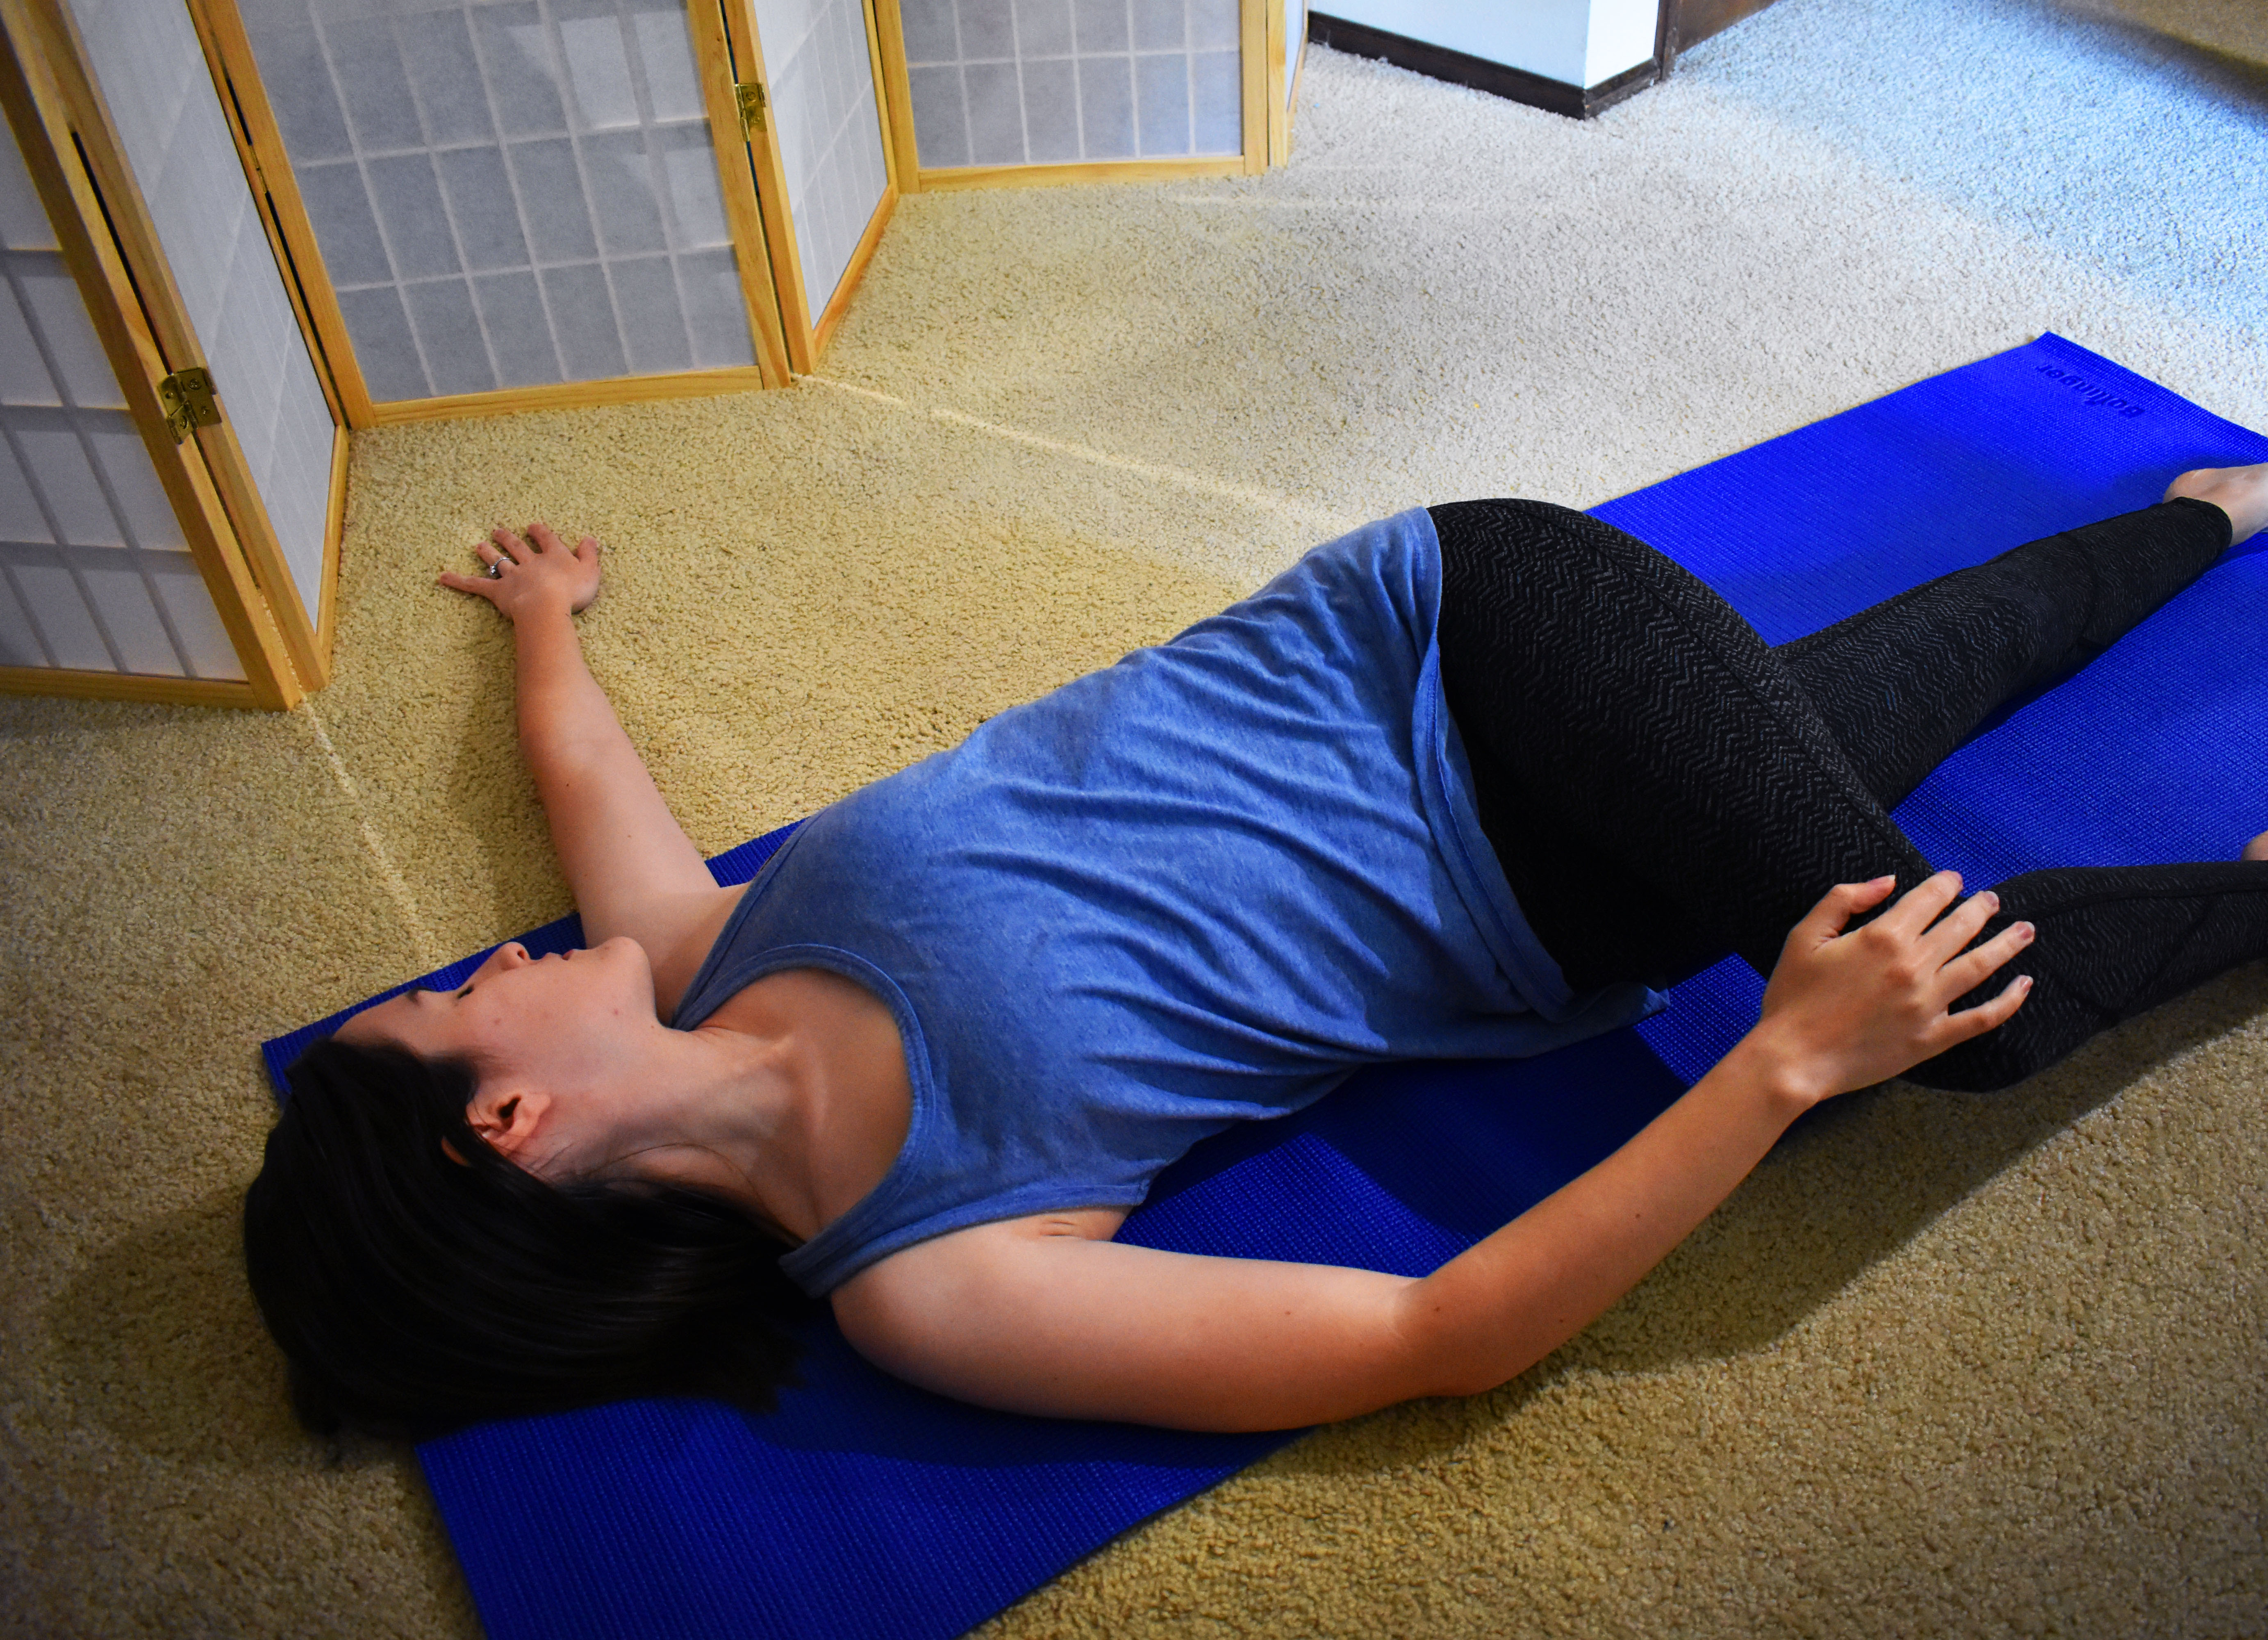 Yoga with props - easy poses with blocks, strap & bolster | Yoga via Sofia